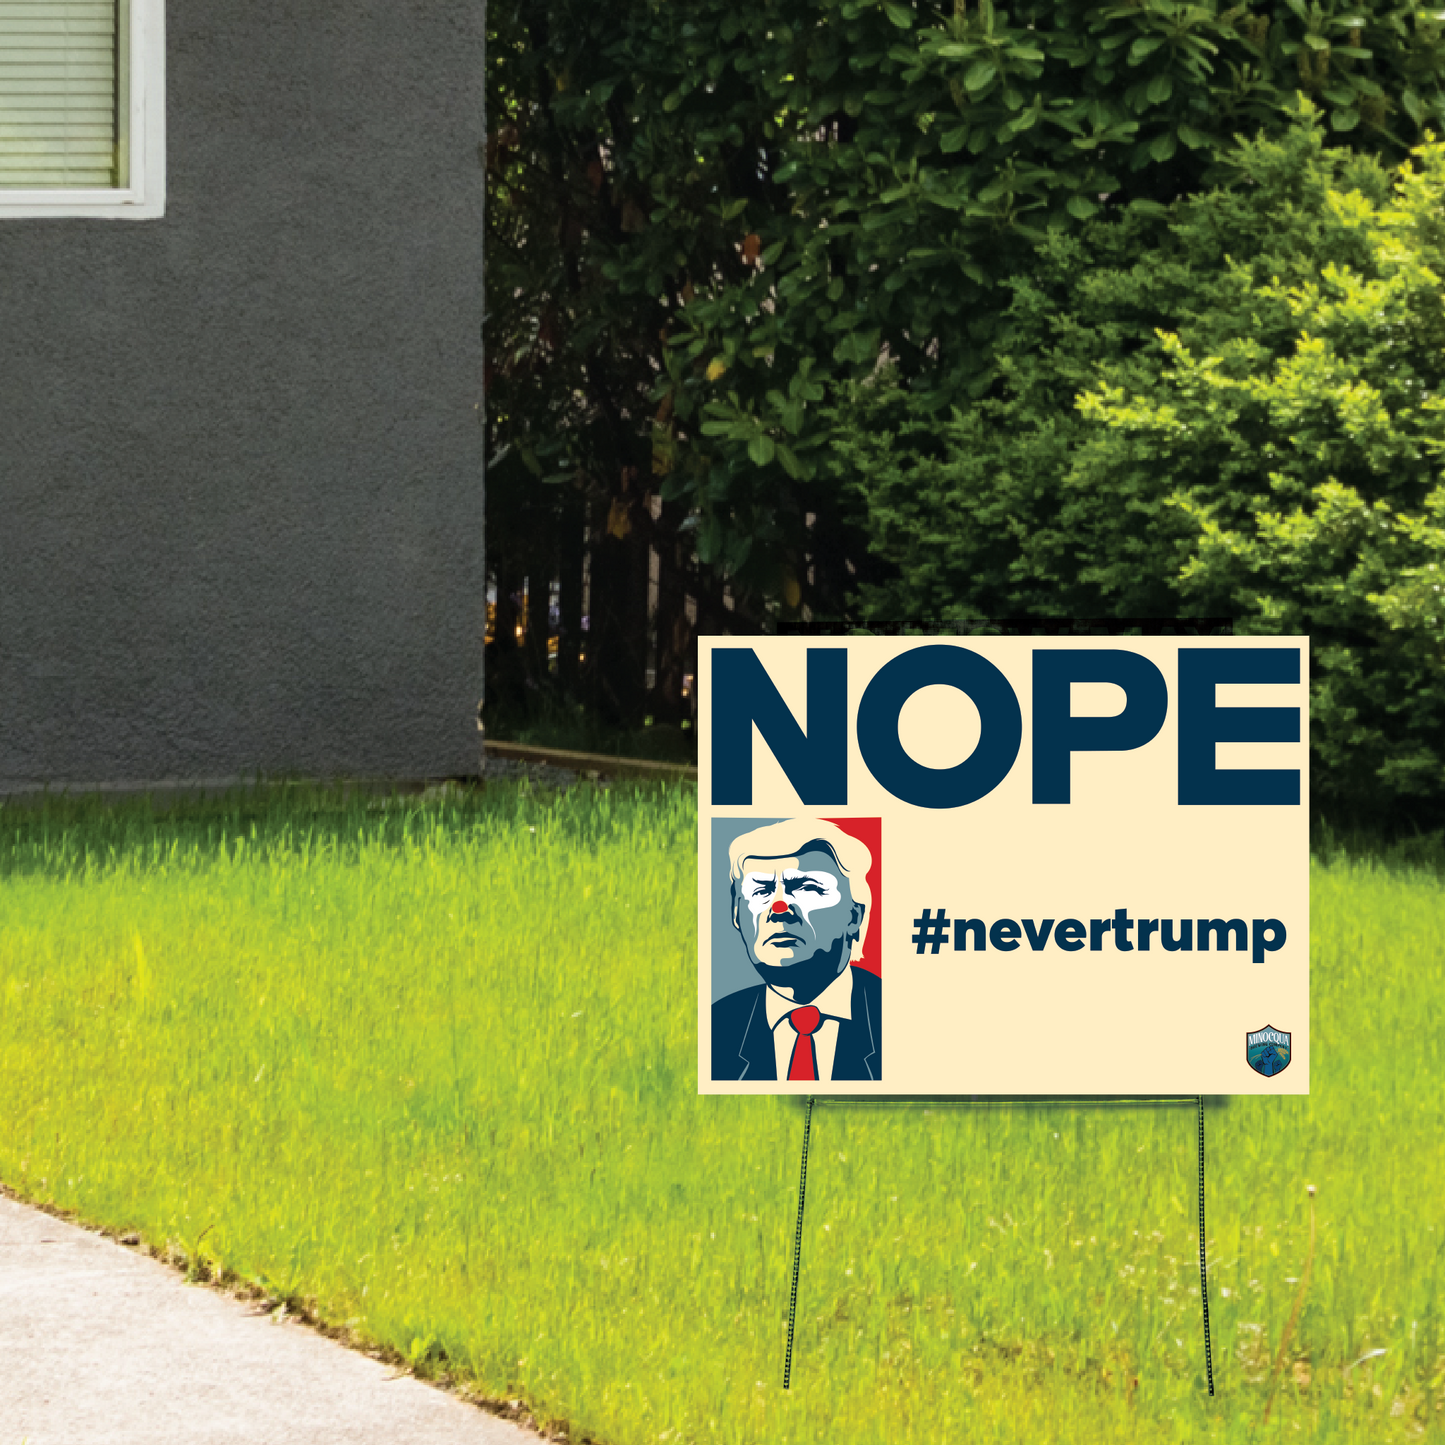 nope-never-trump